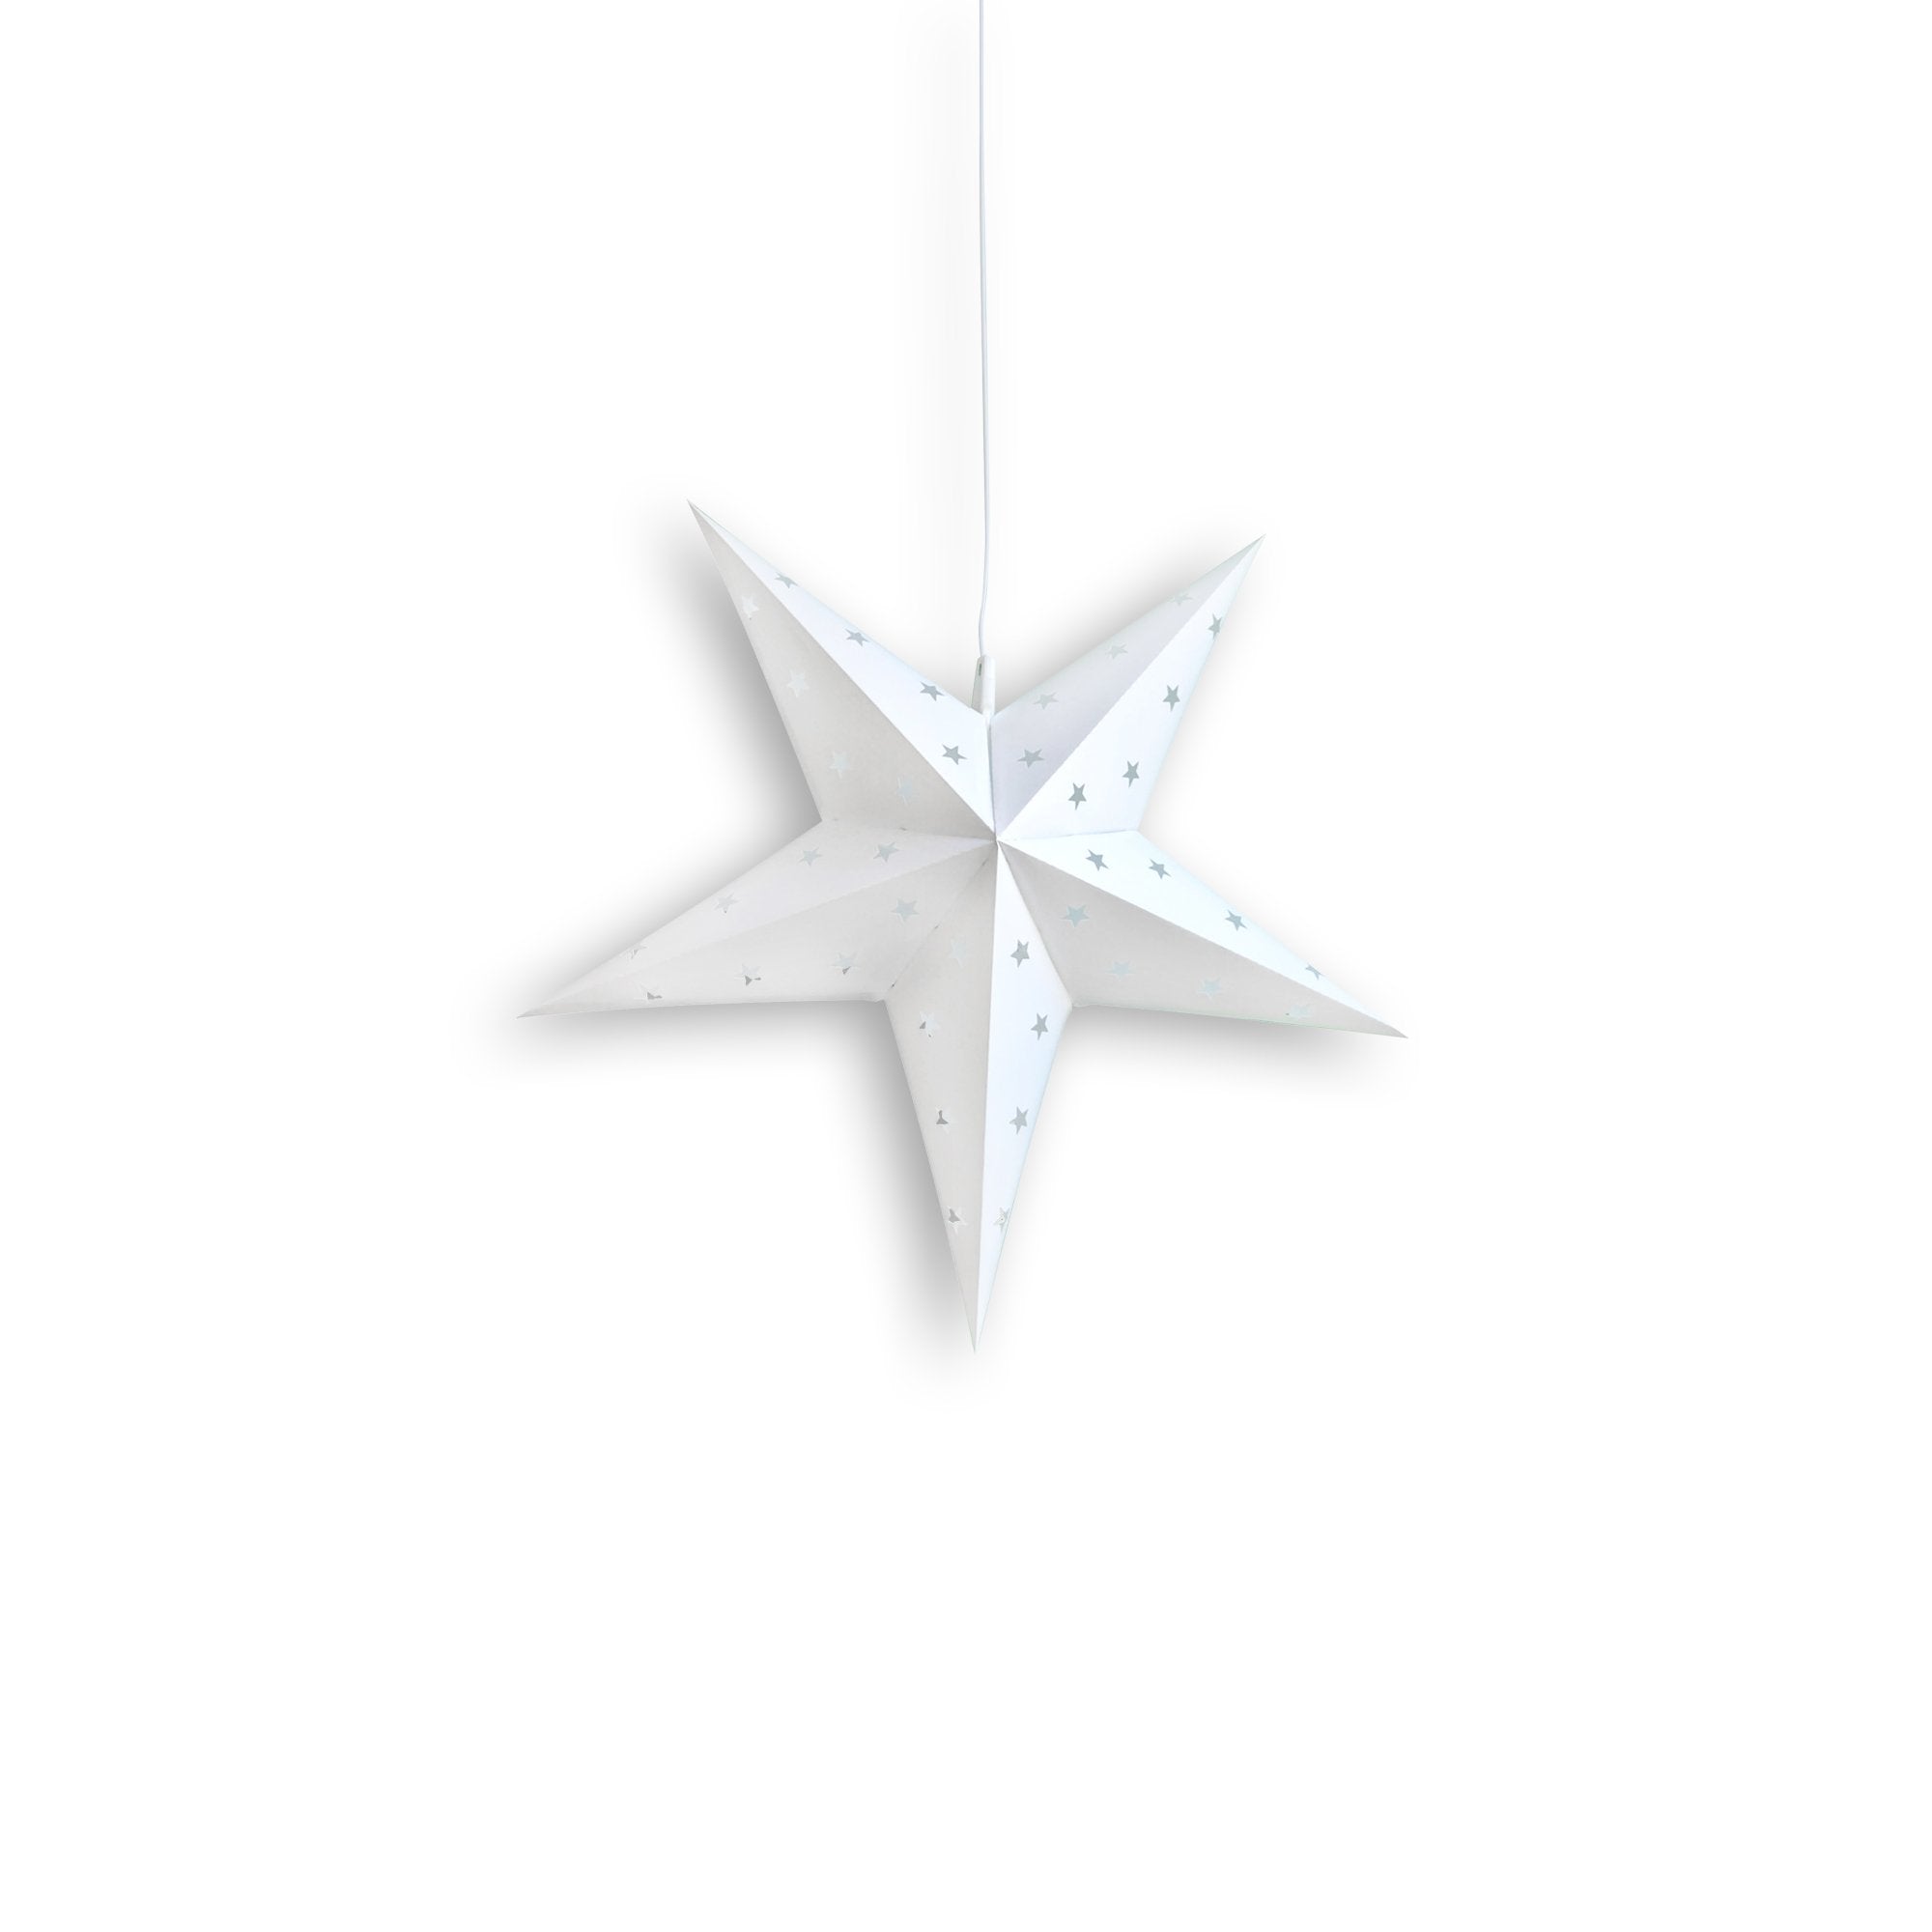 11" White Weatherproof Star Lantern Lamp, Hanging Decoration (Shade Only)